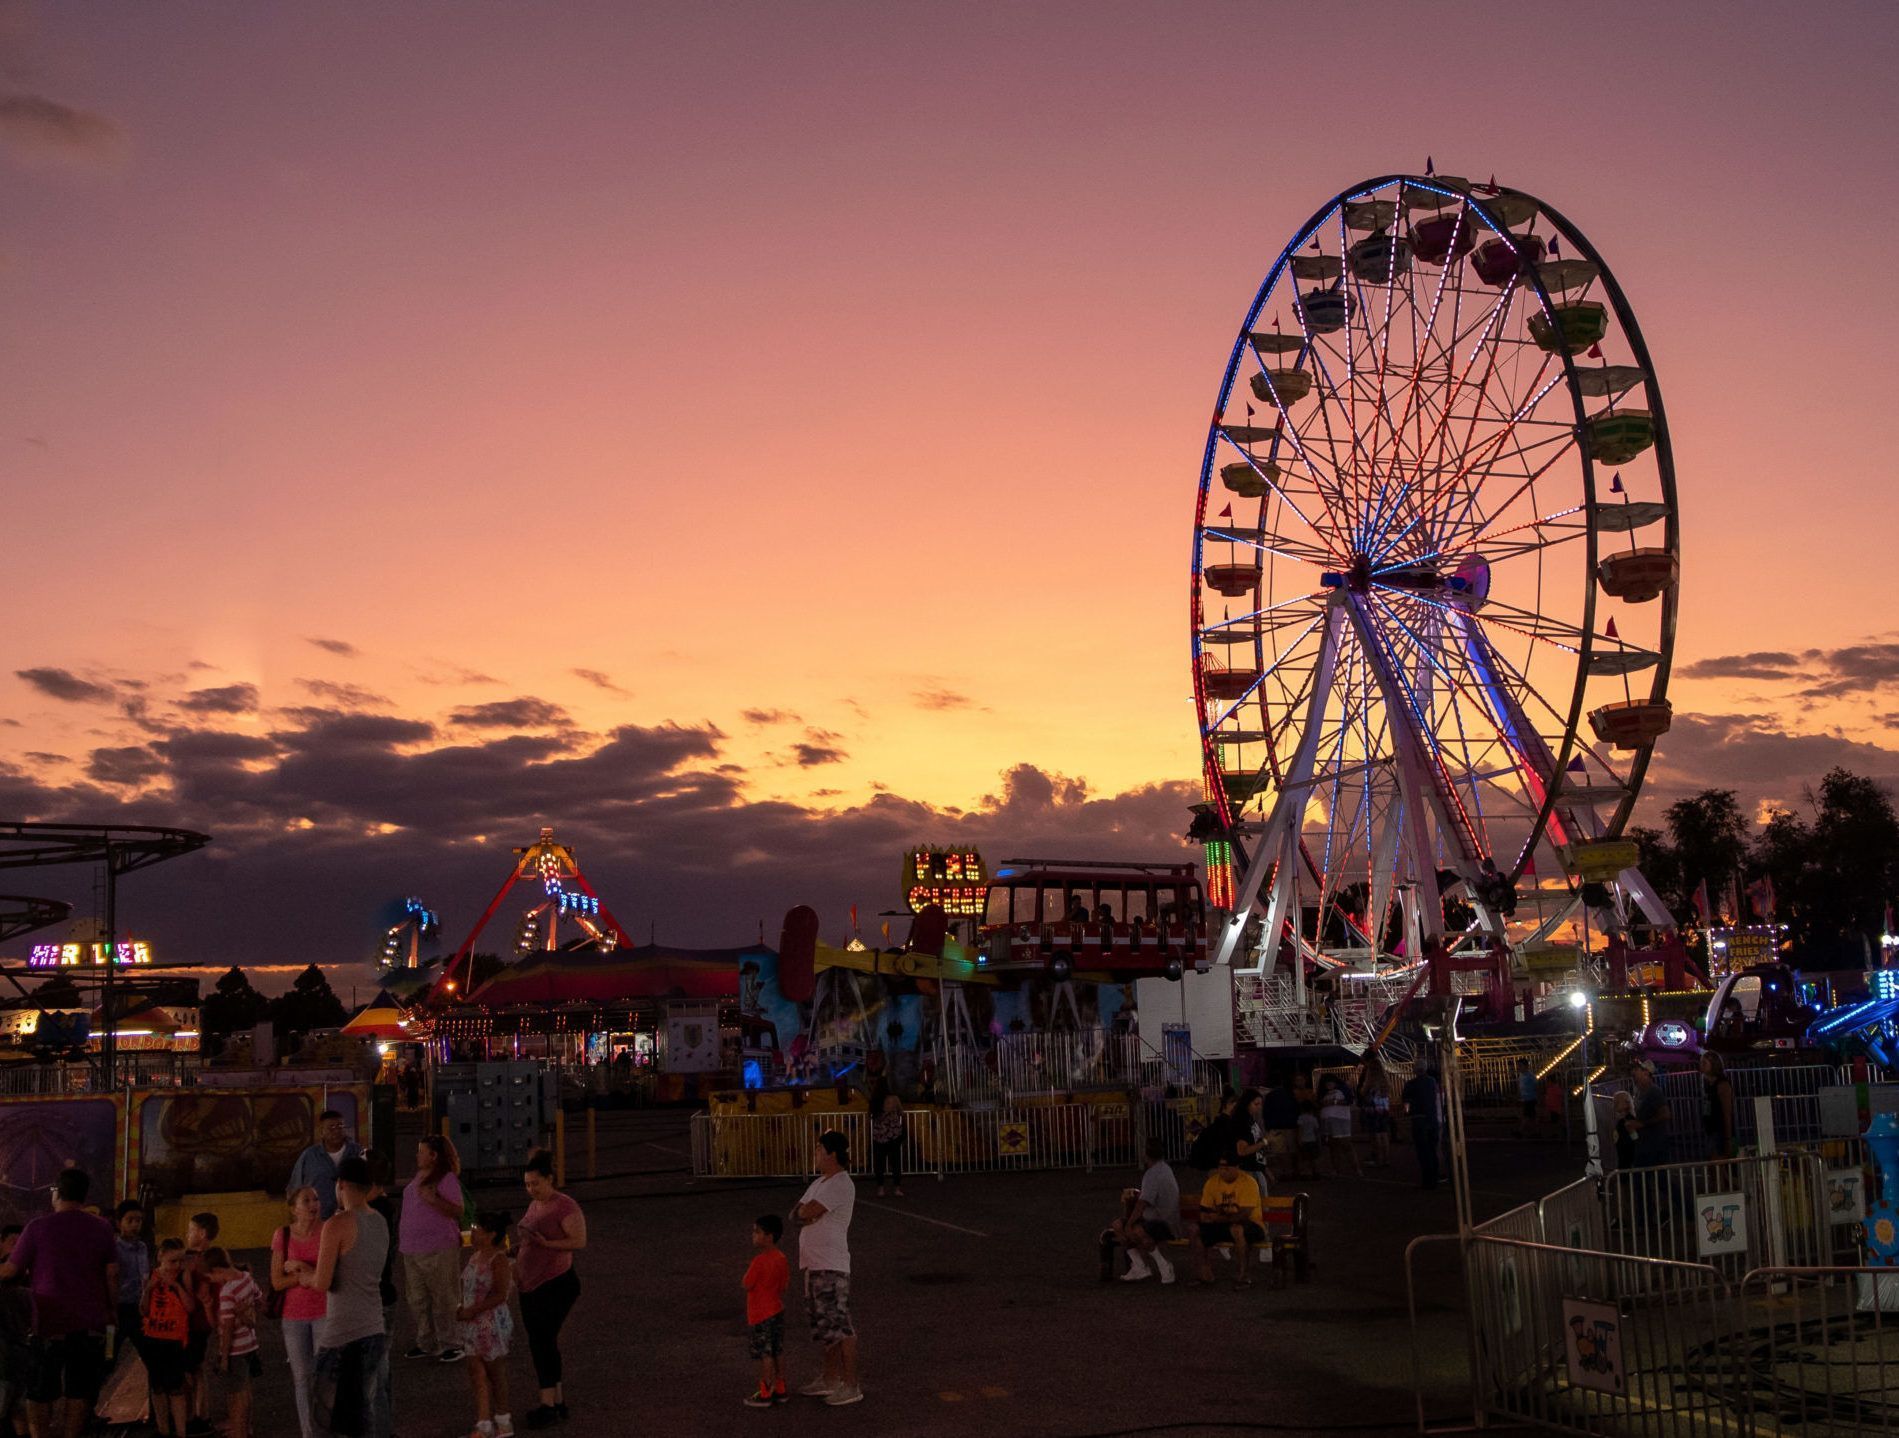 The Ferris Wheel at the Colorado State Fair at dusk